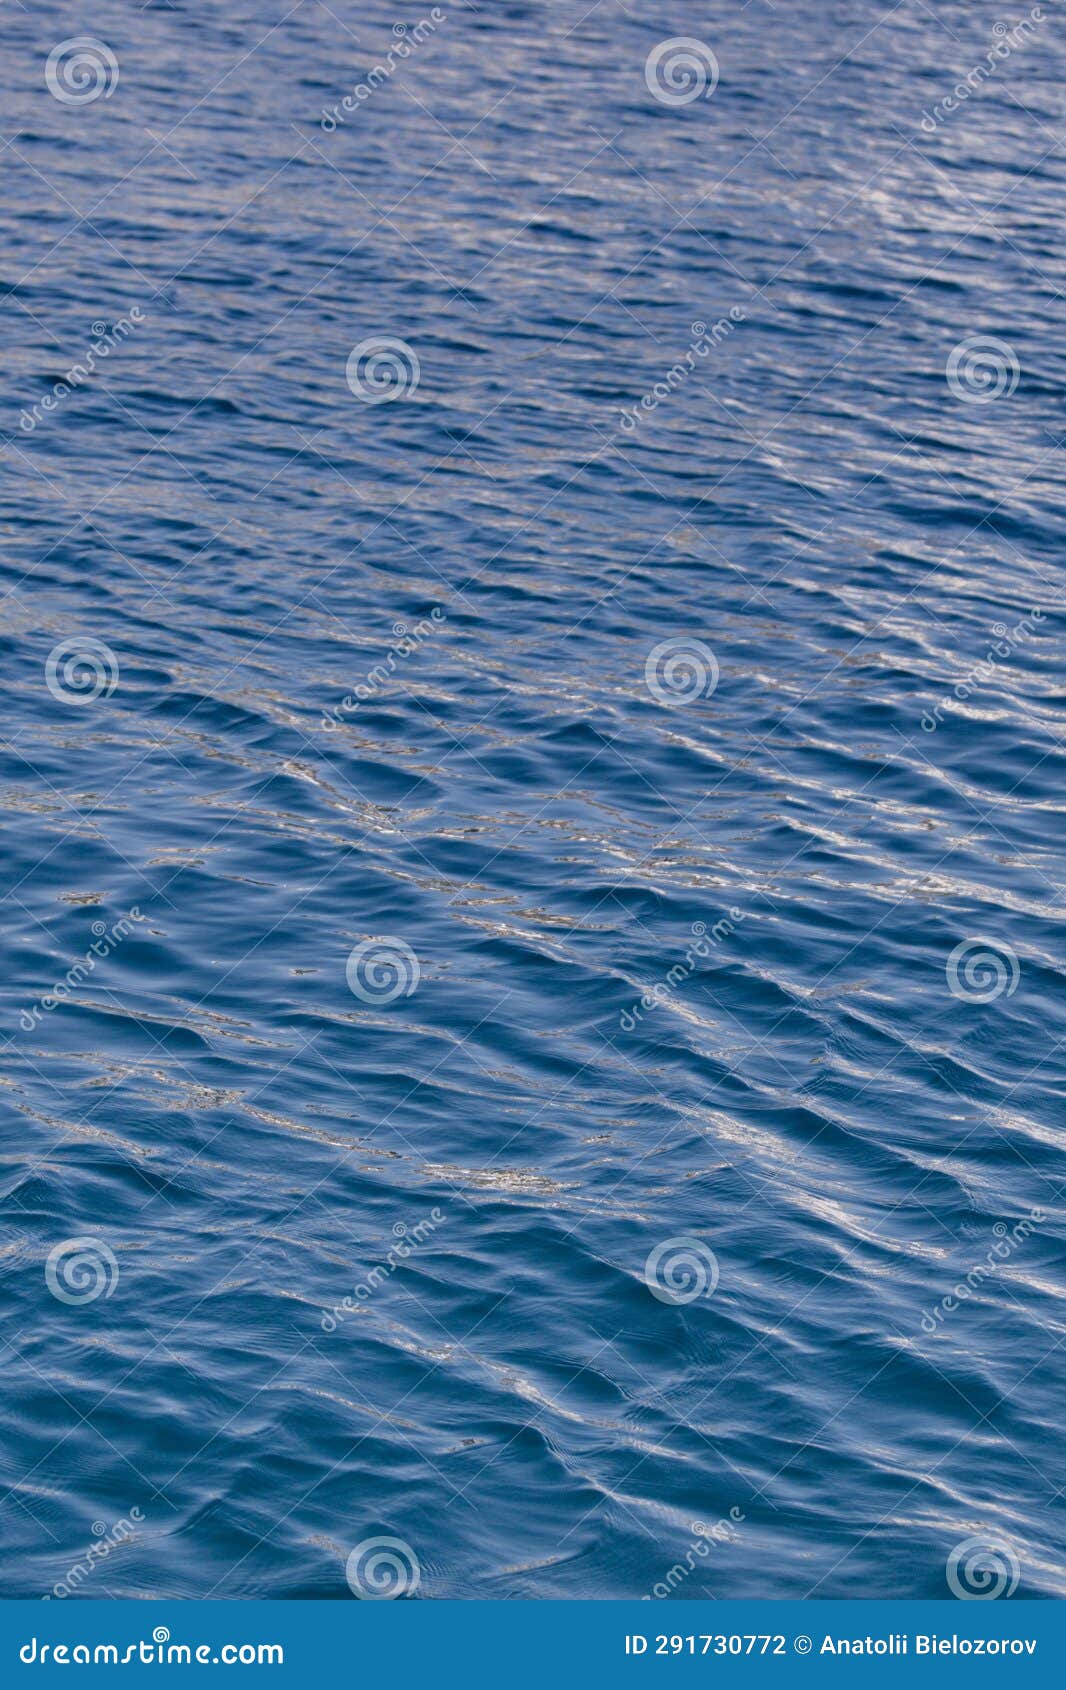 foto de ondas marinas para diseÃ±o y fondo